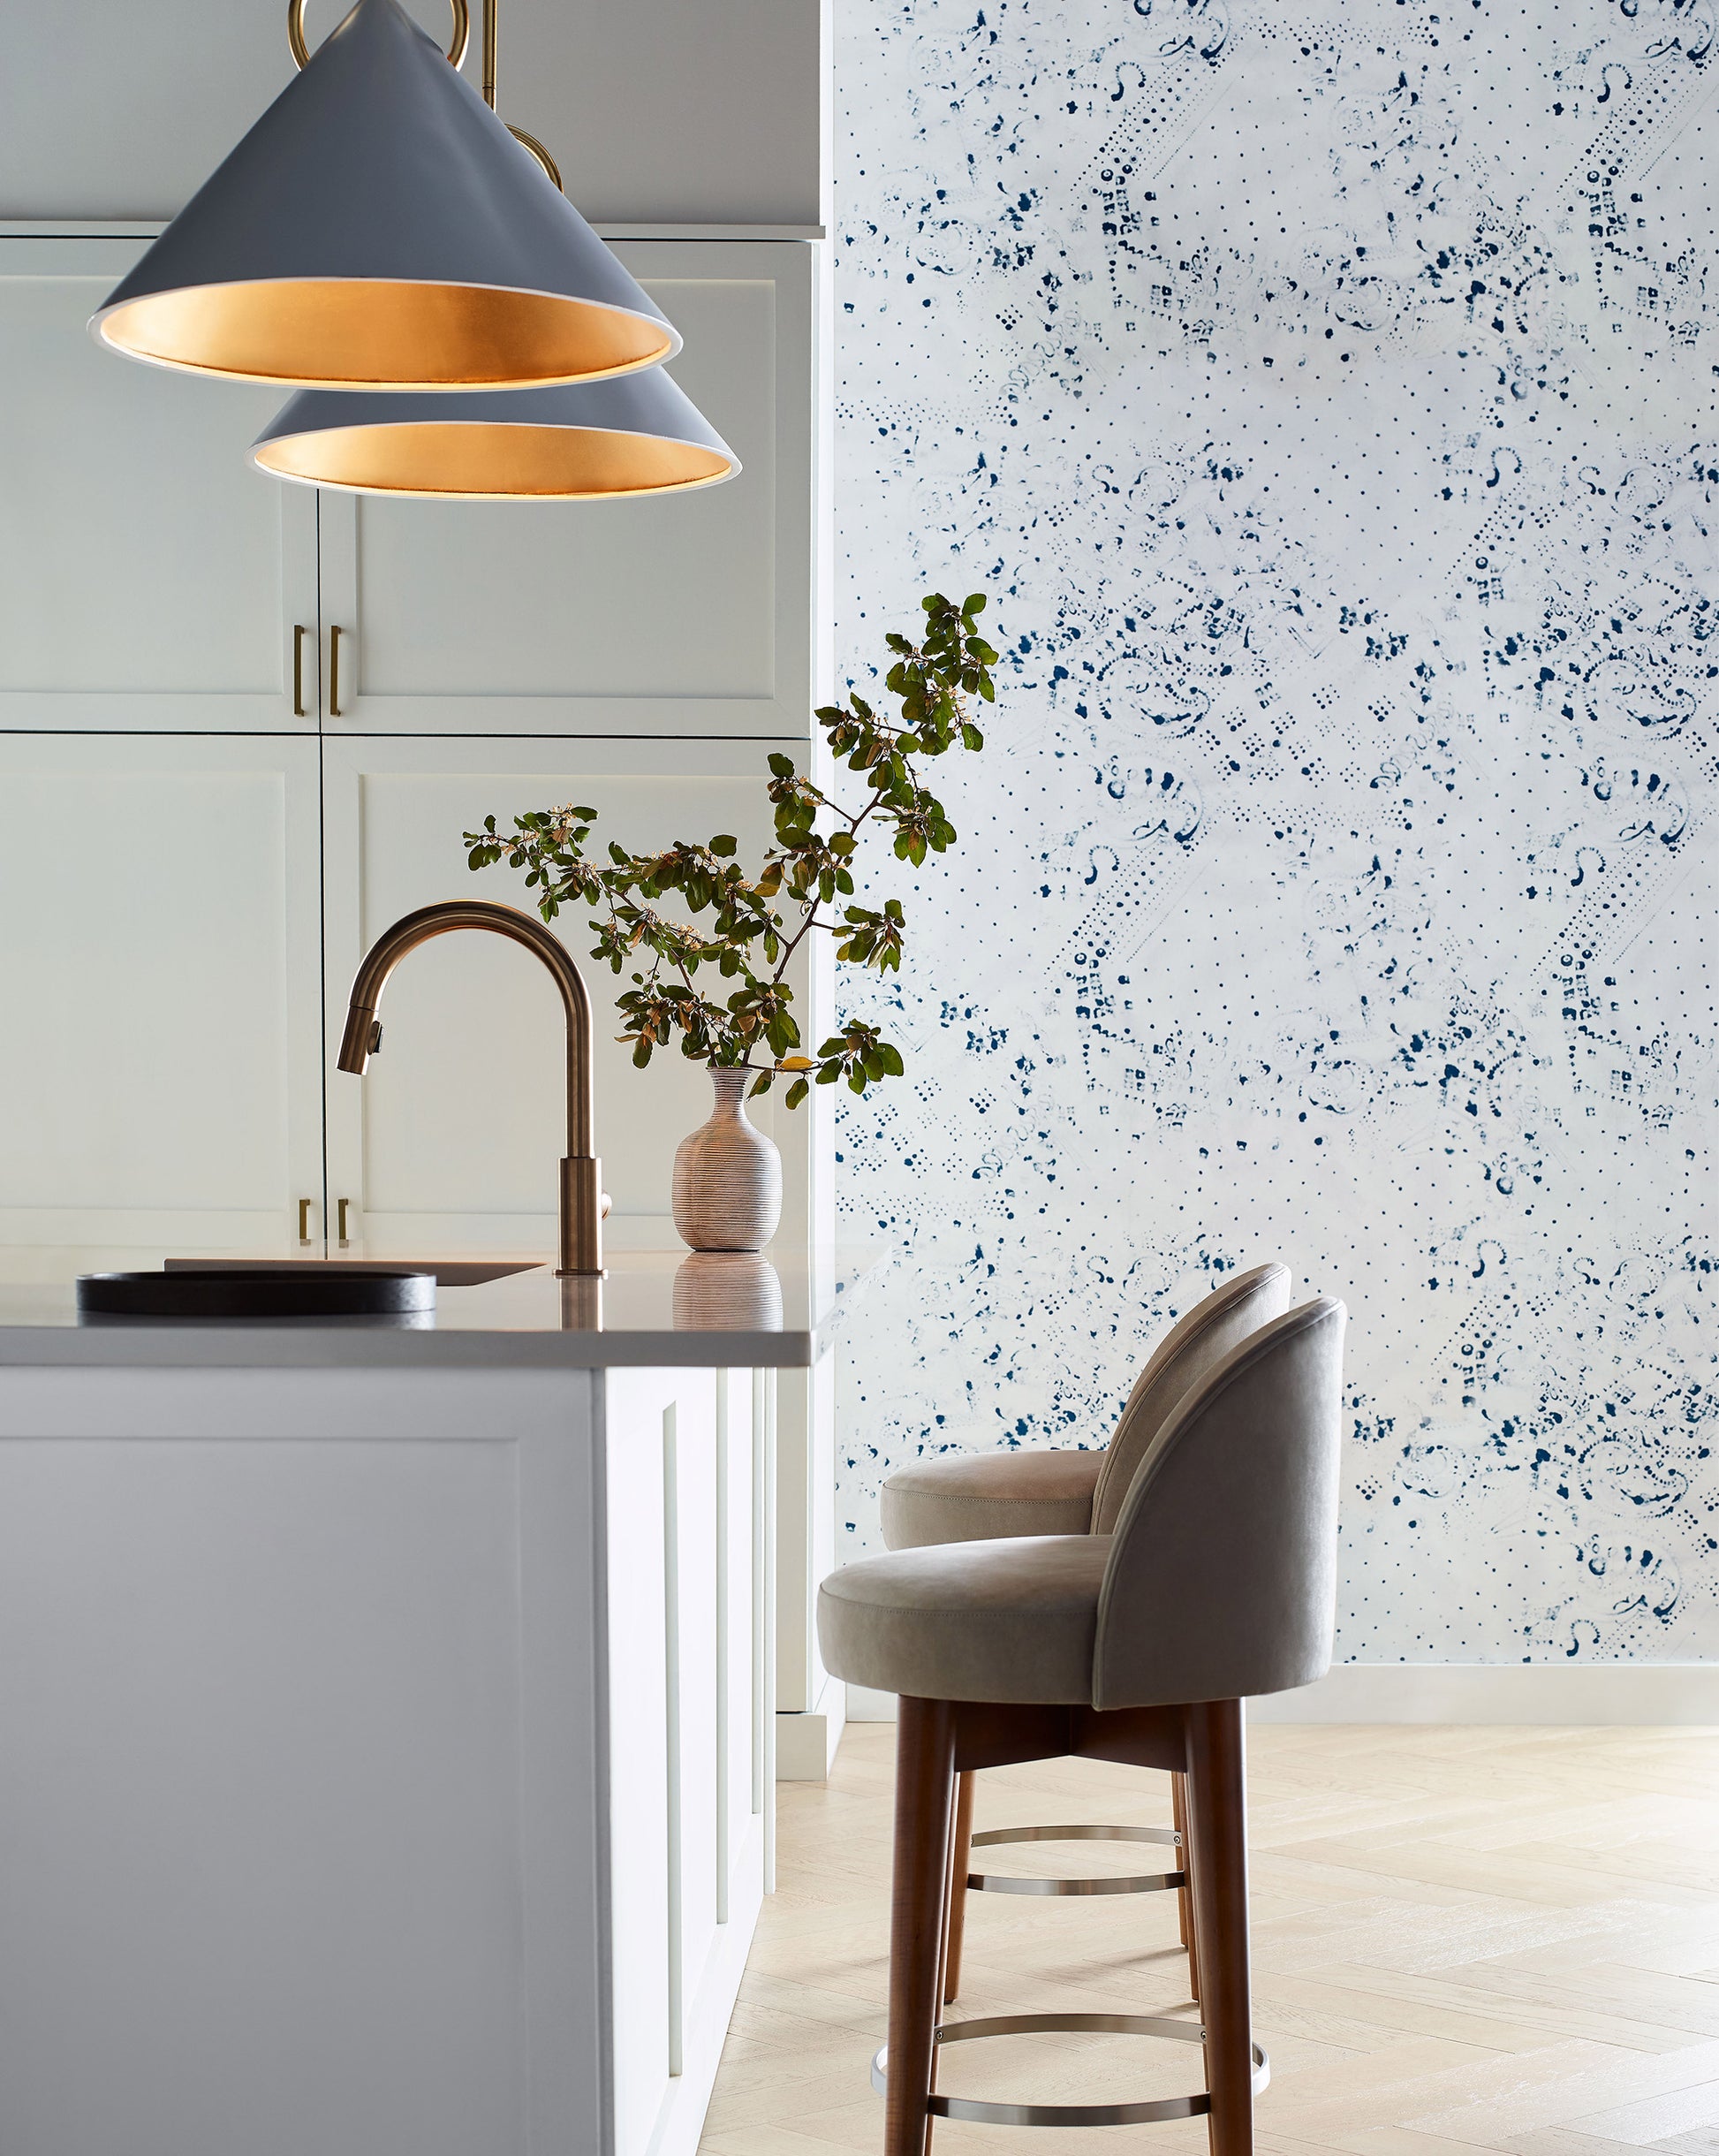 A kitchen with a Bandanarama Wallpaper||Indigo featuring playful polka dots.